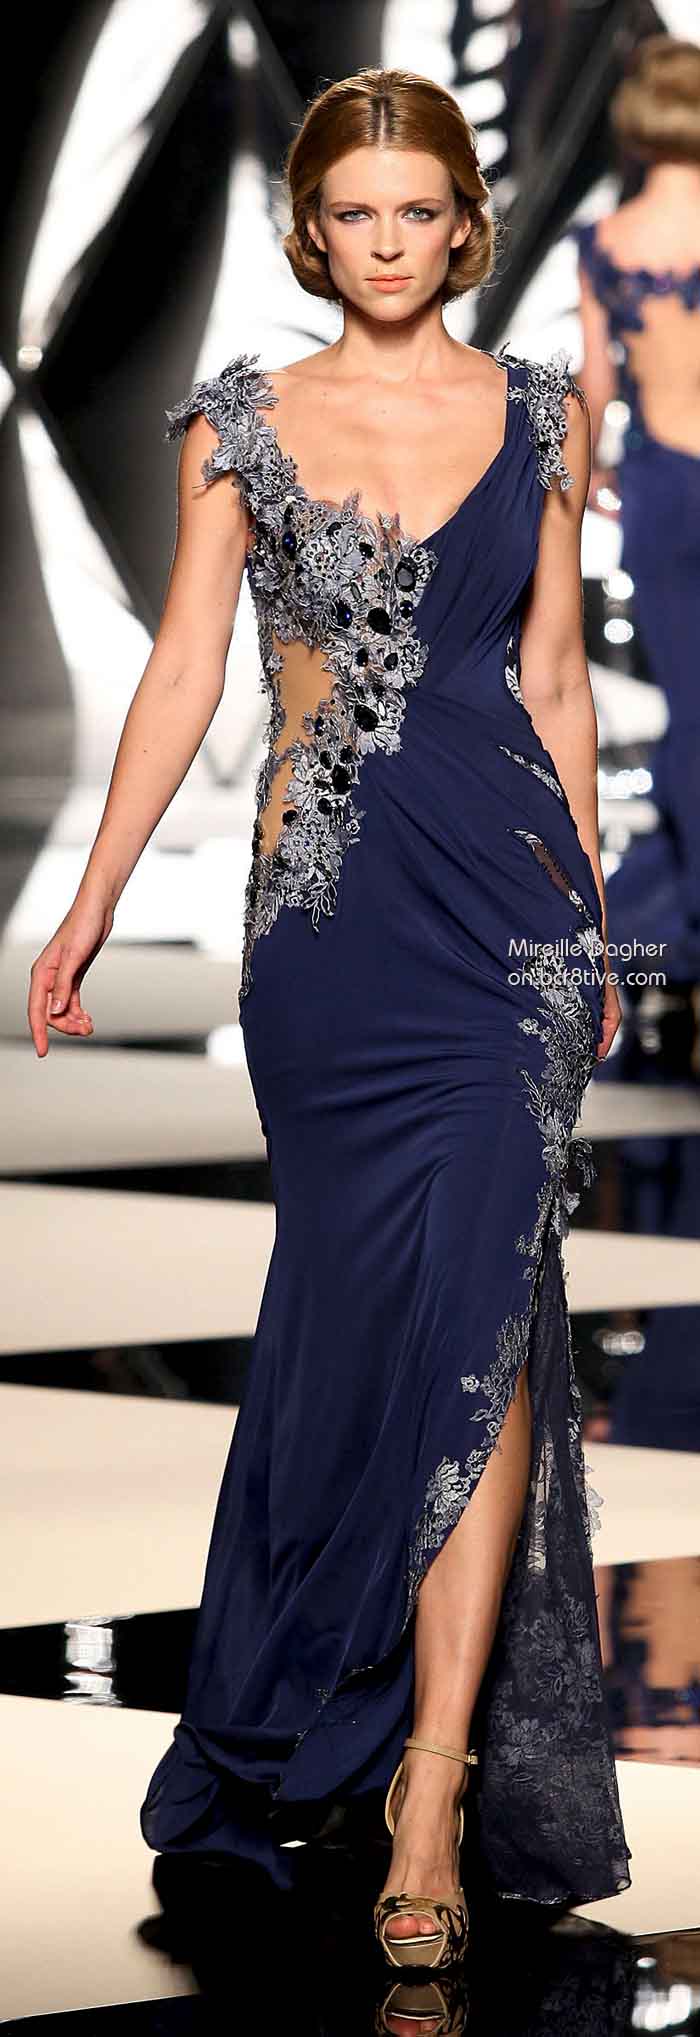 Mireille Dagher Fall Winter 2013-14 Haute Couture